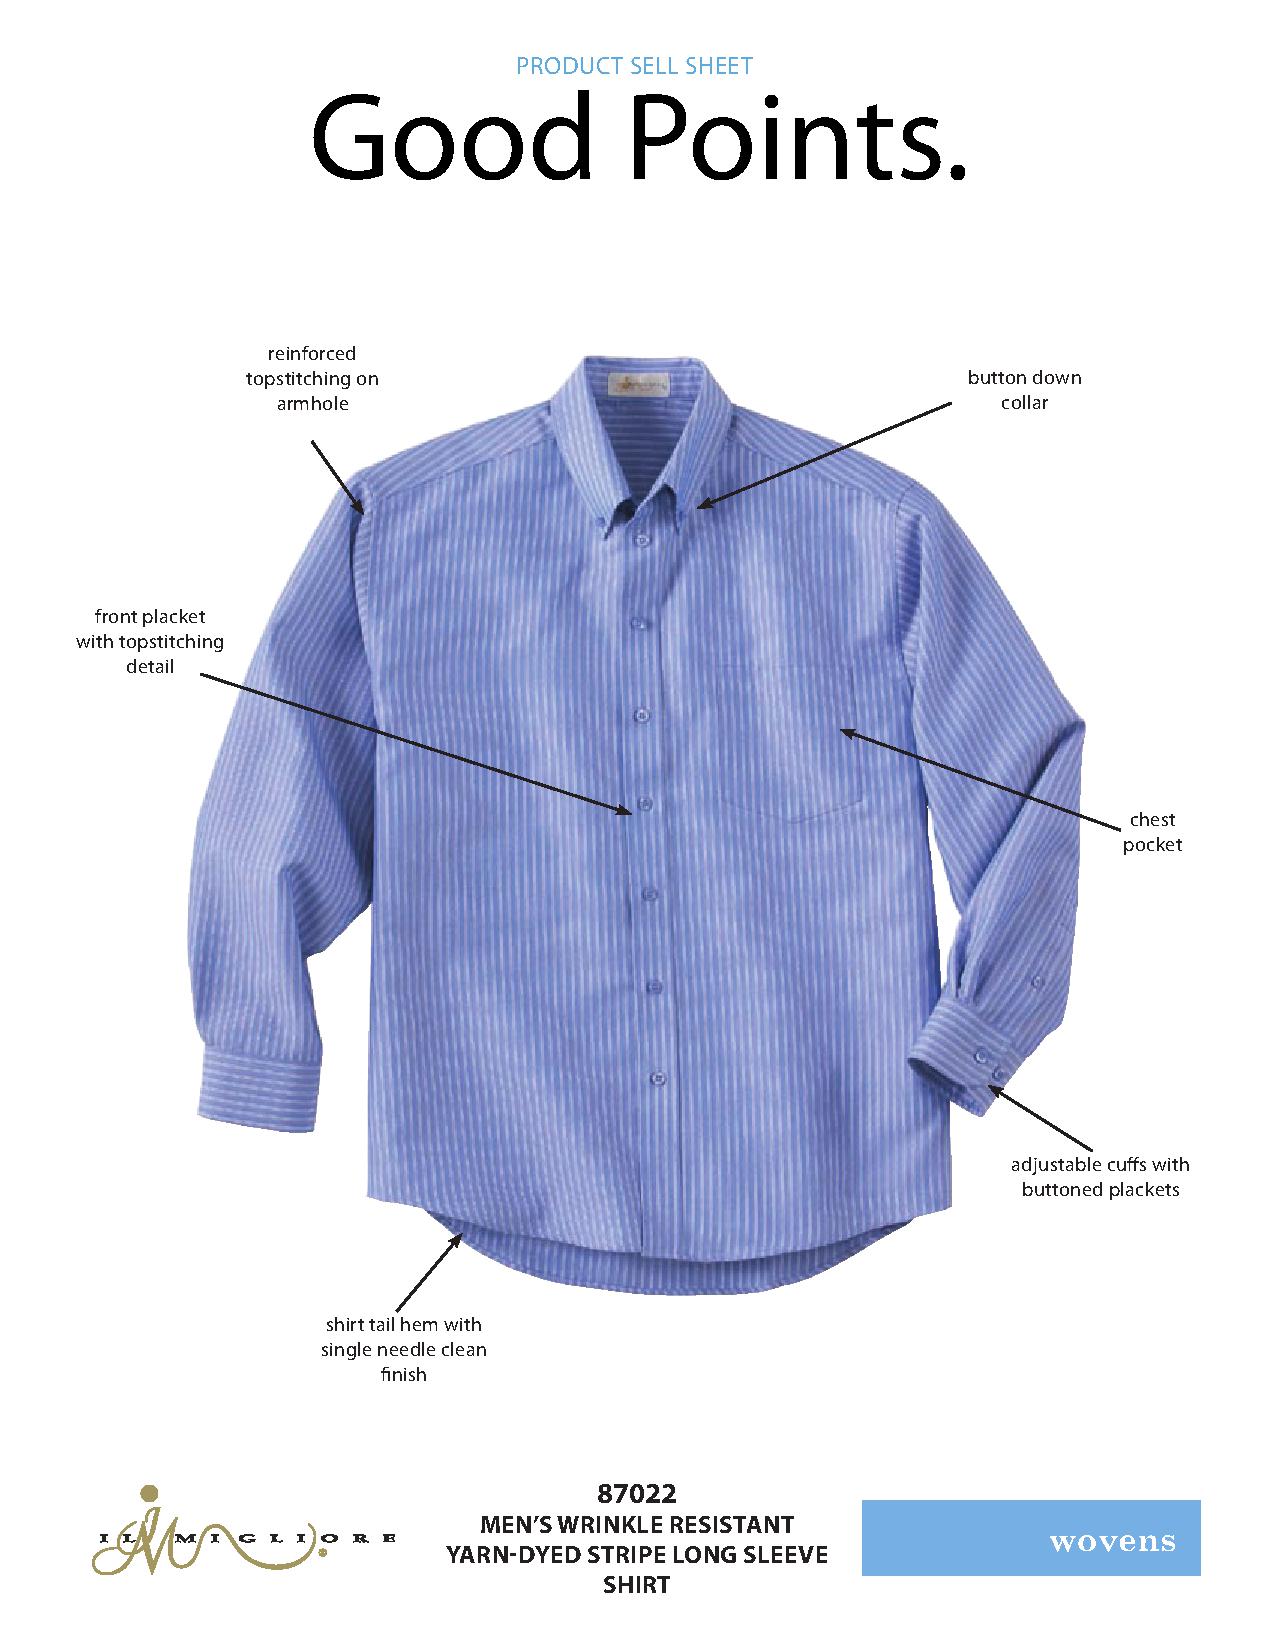 Ash City Easy care 87022 - Men's Wrinkle-Resistant Yarn-Dyed Stripe Long Sleeve Shirt